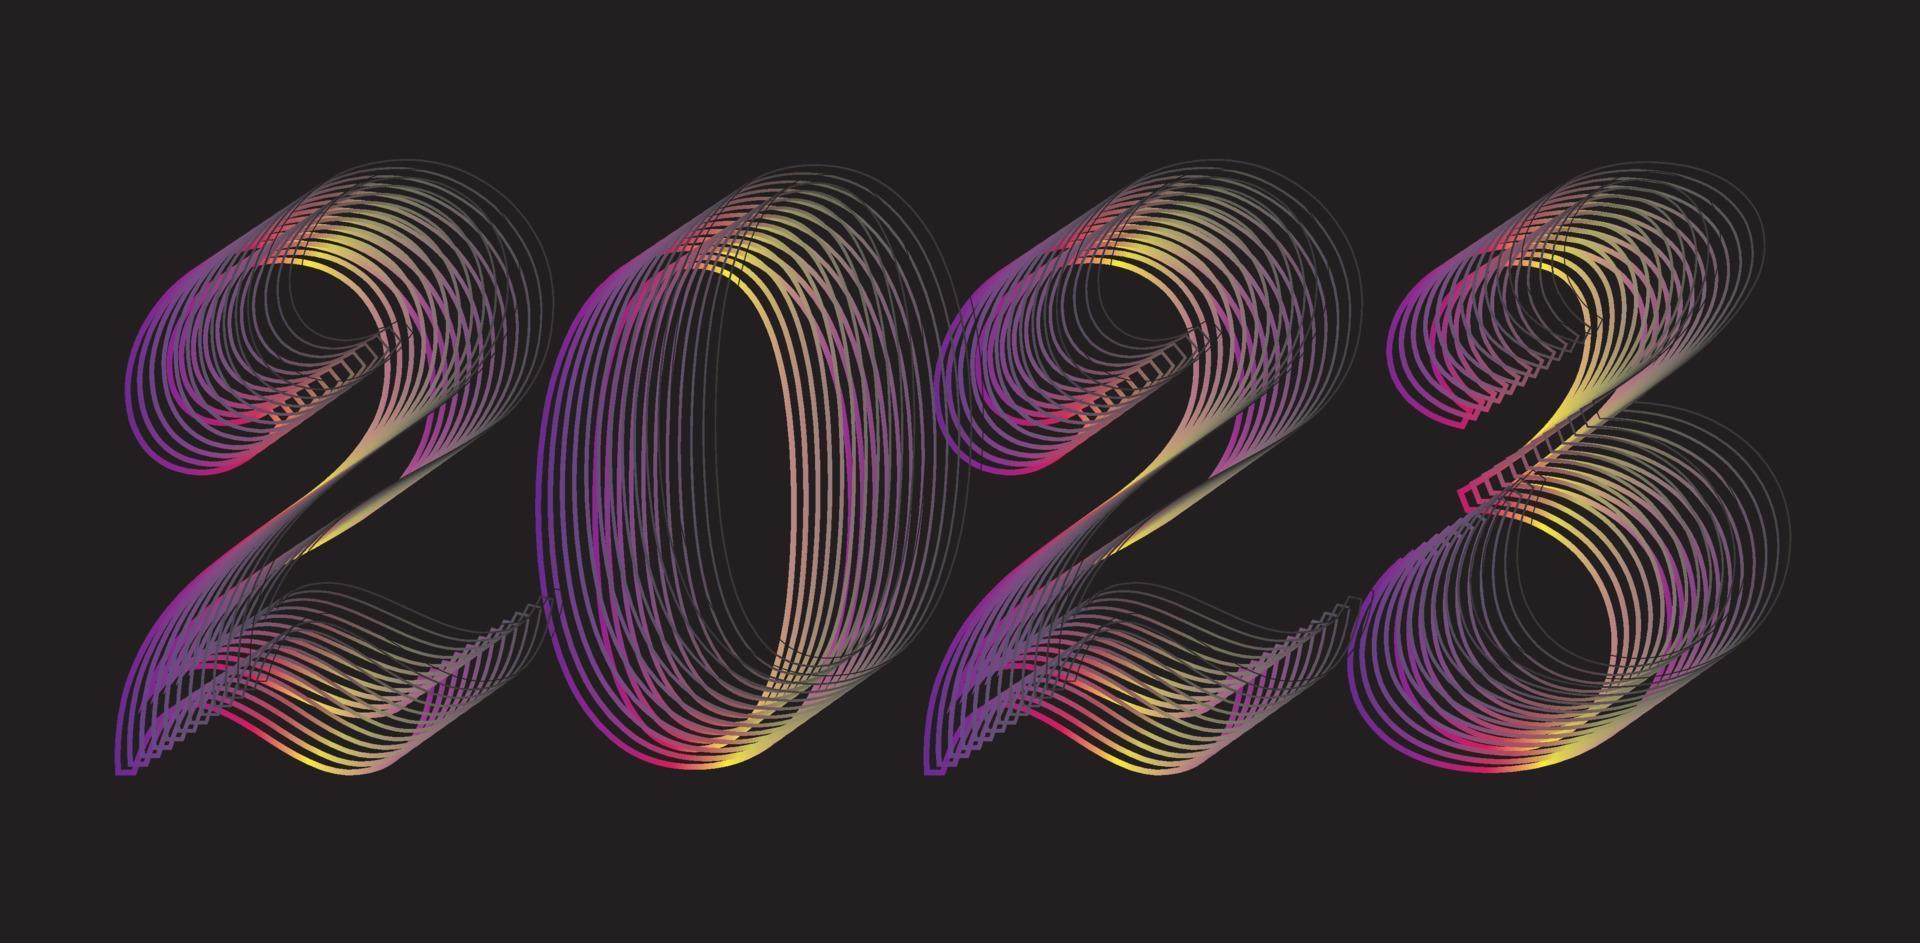 2023. Neon inscription. New Year. High quality vector illustration.